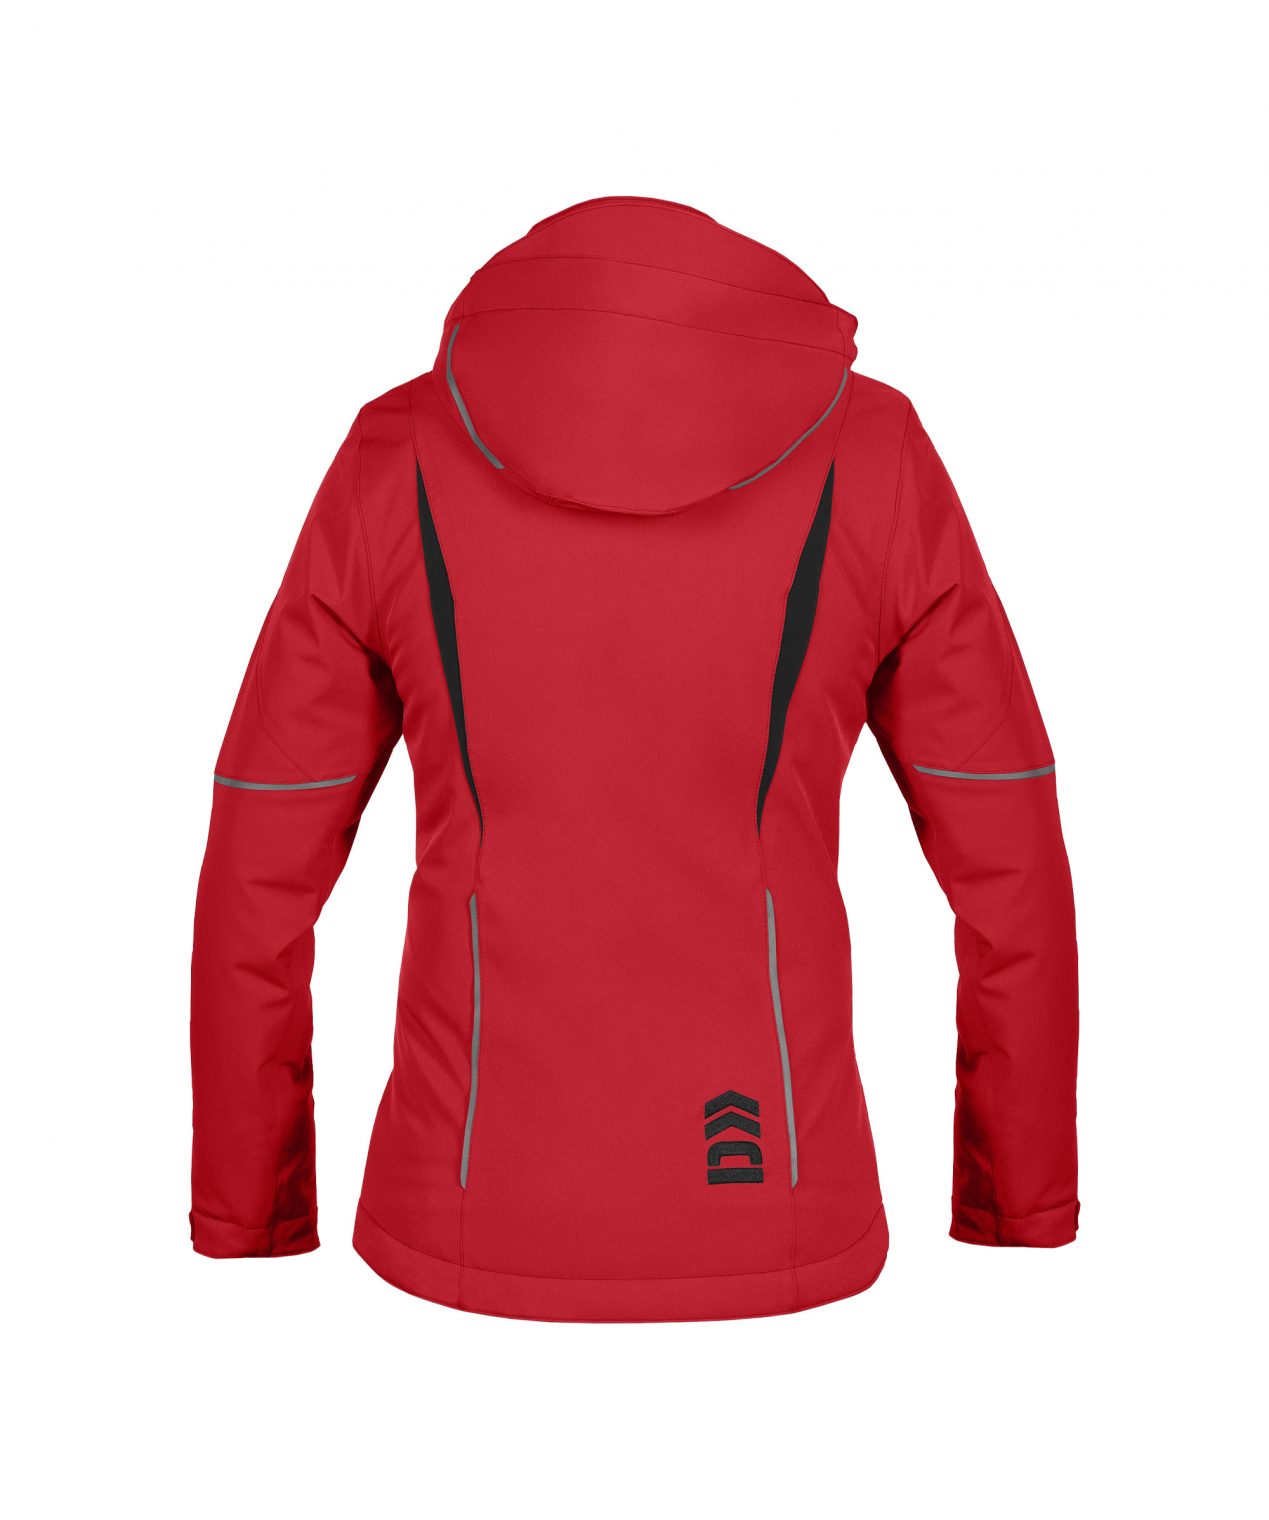 nordix women stretch winter jacket red back